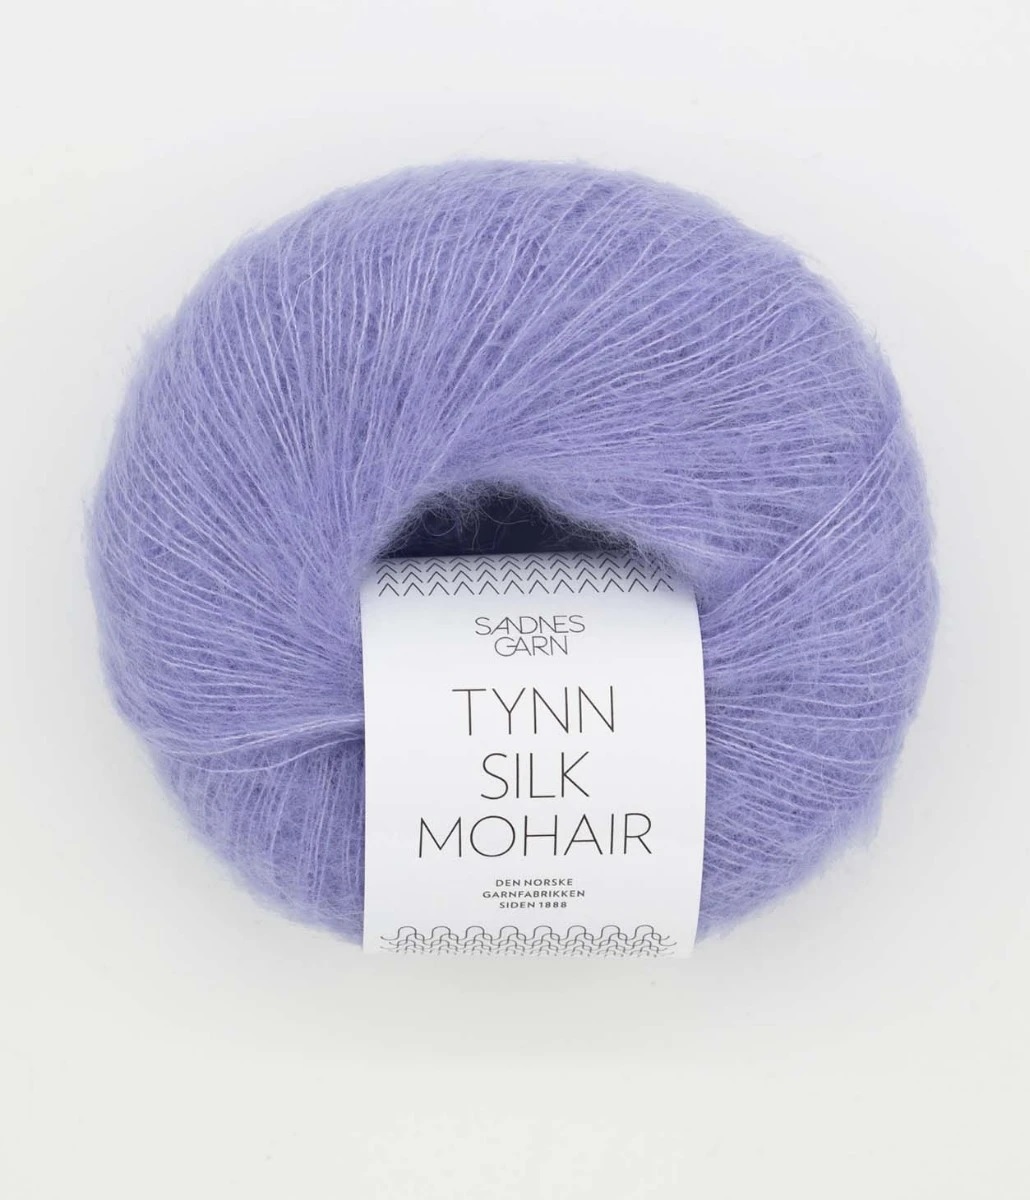 5214 Tynn Silk Mohair - lys krokus